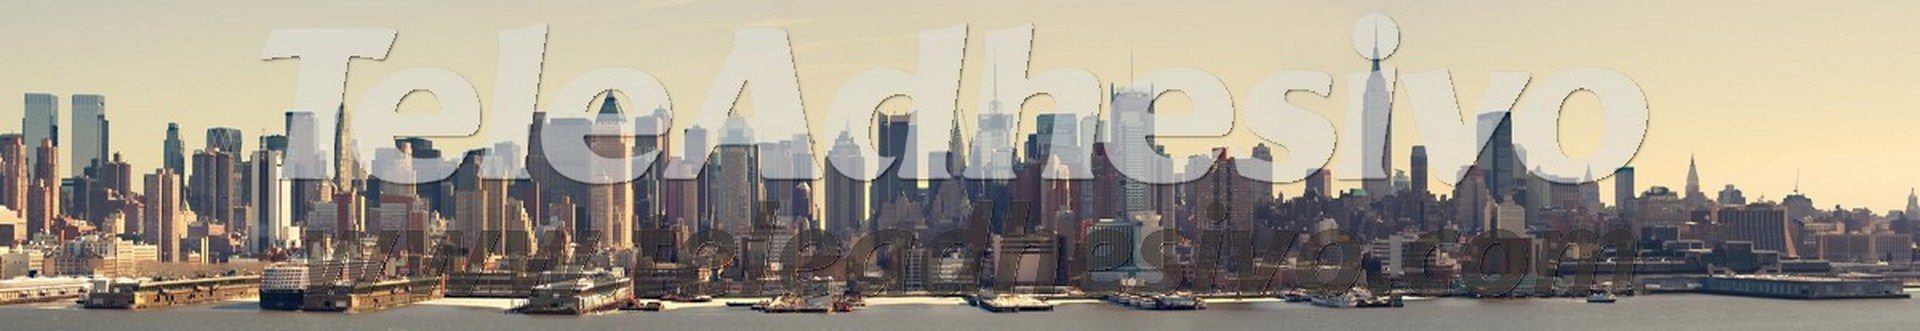 Fototapeten: Panorama von Manhattan